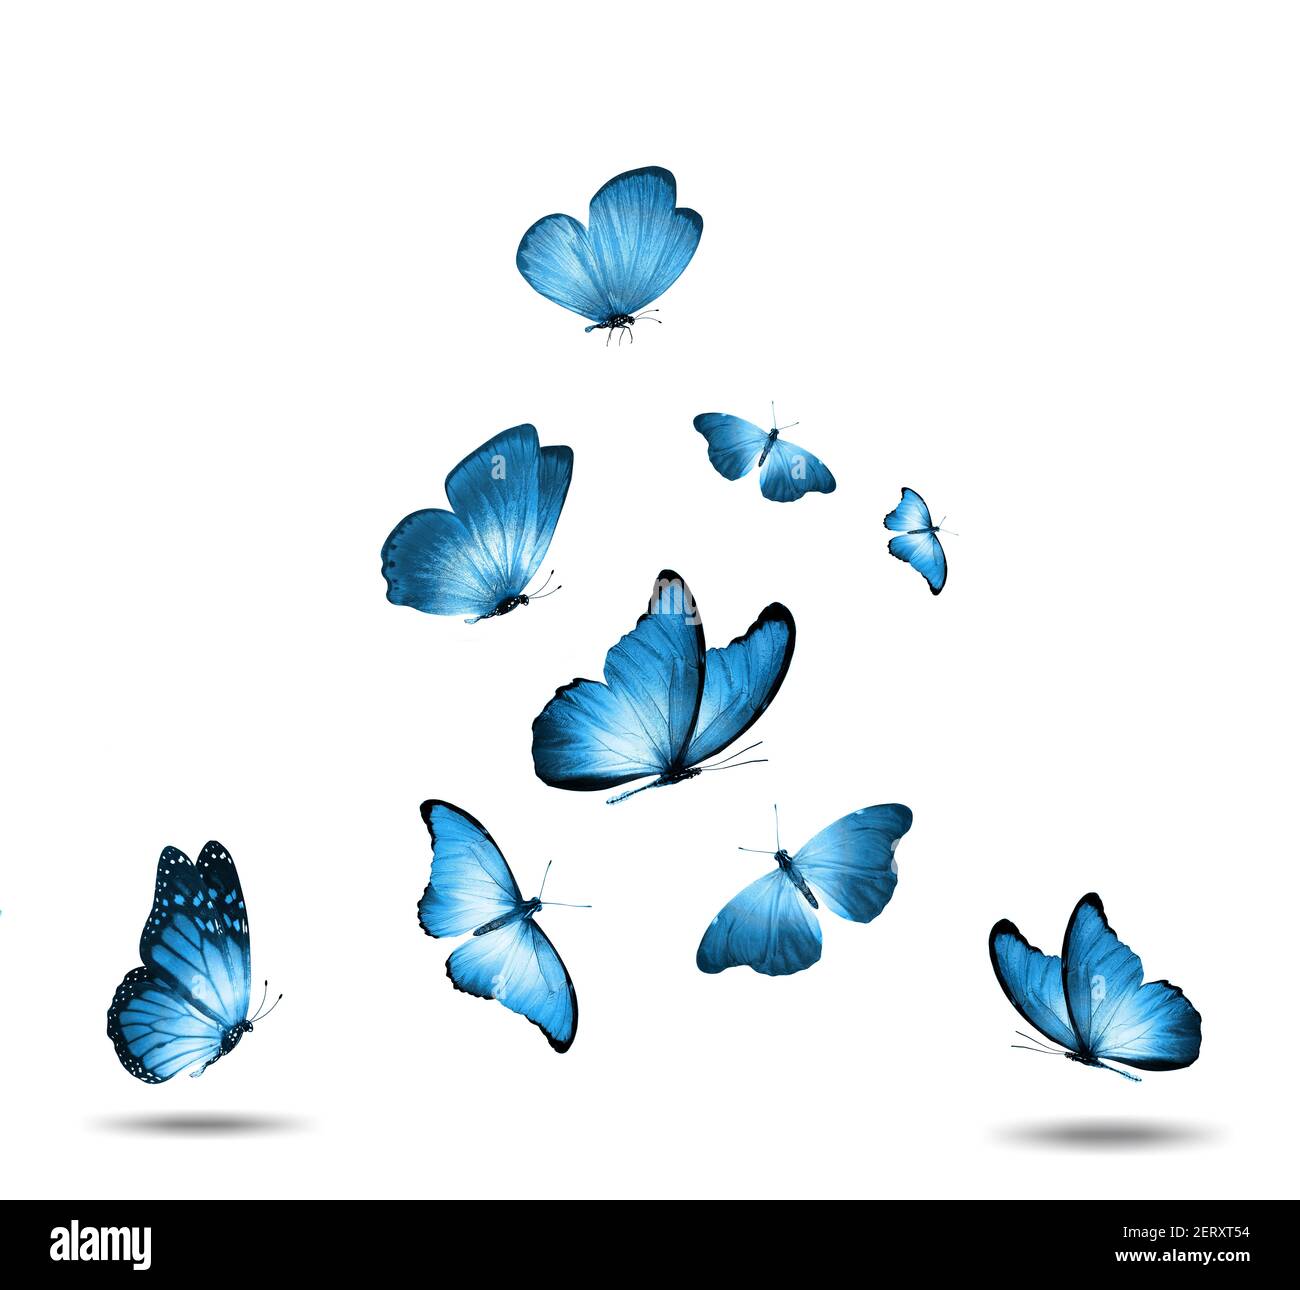 insieme di farfalle blu isolate su sfondo bianco Foto stock - Alamy